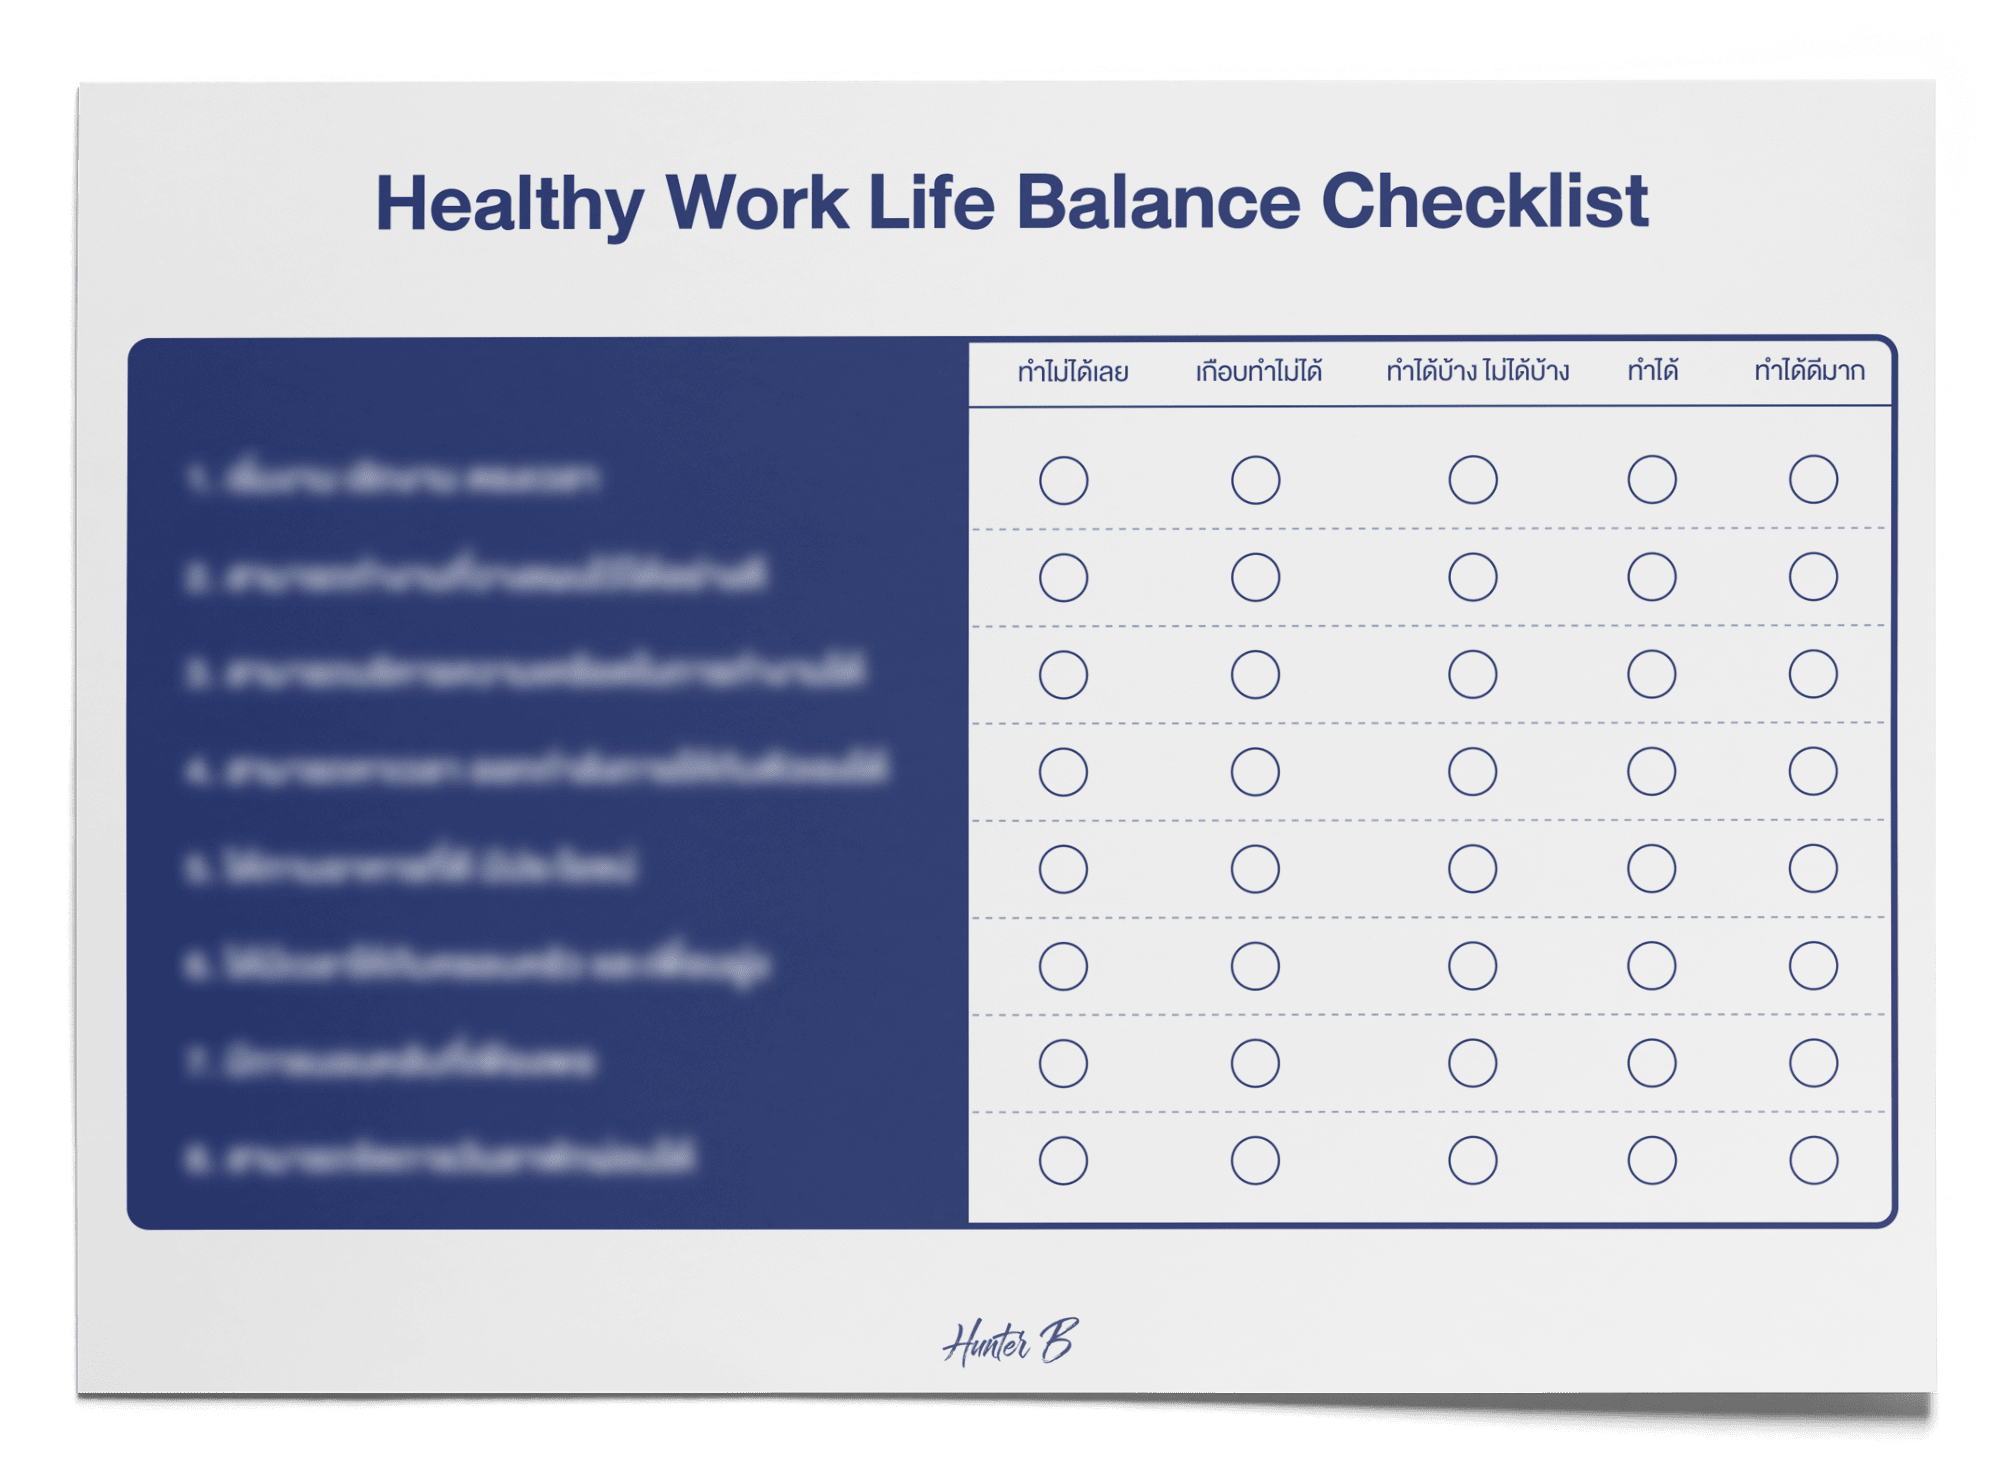 Healthy Work Life Balalnce Checklist - Mock Up